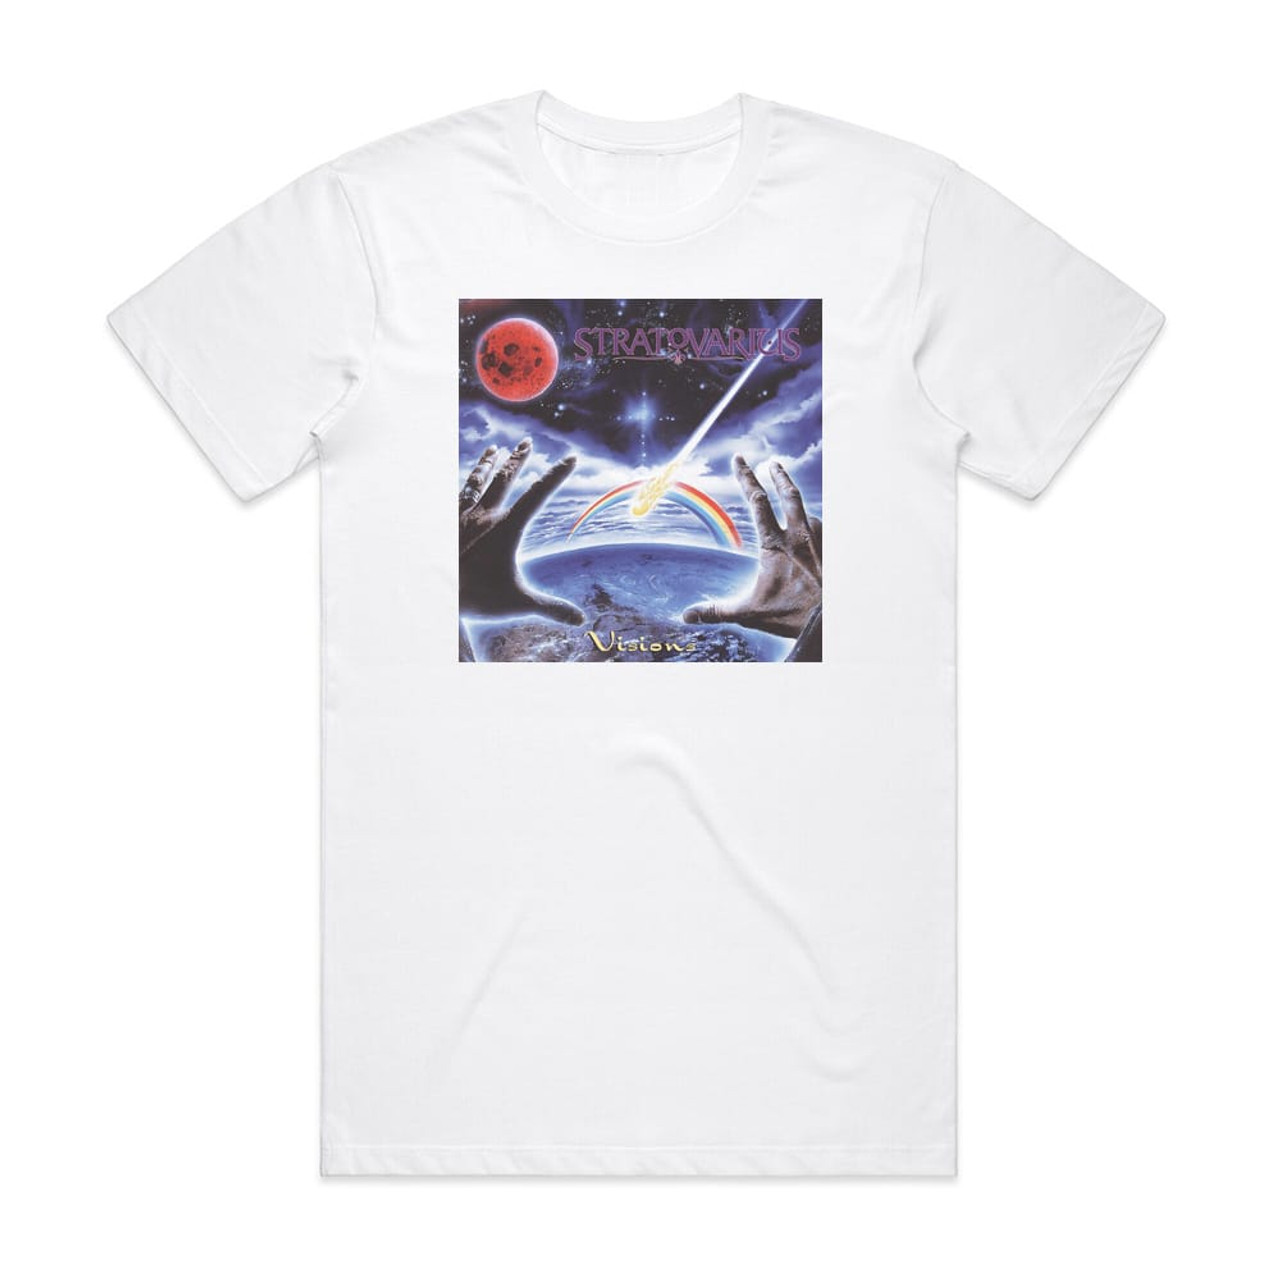 Stratovarius The Chosen Ones Album Cover T-Shirt White